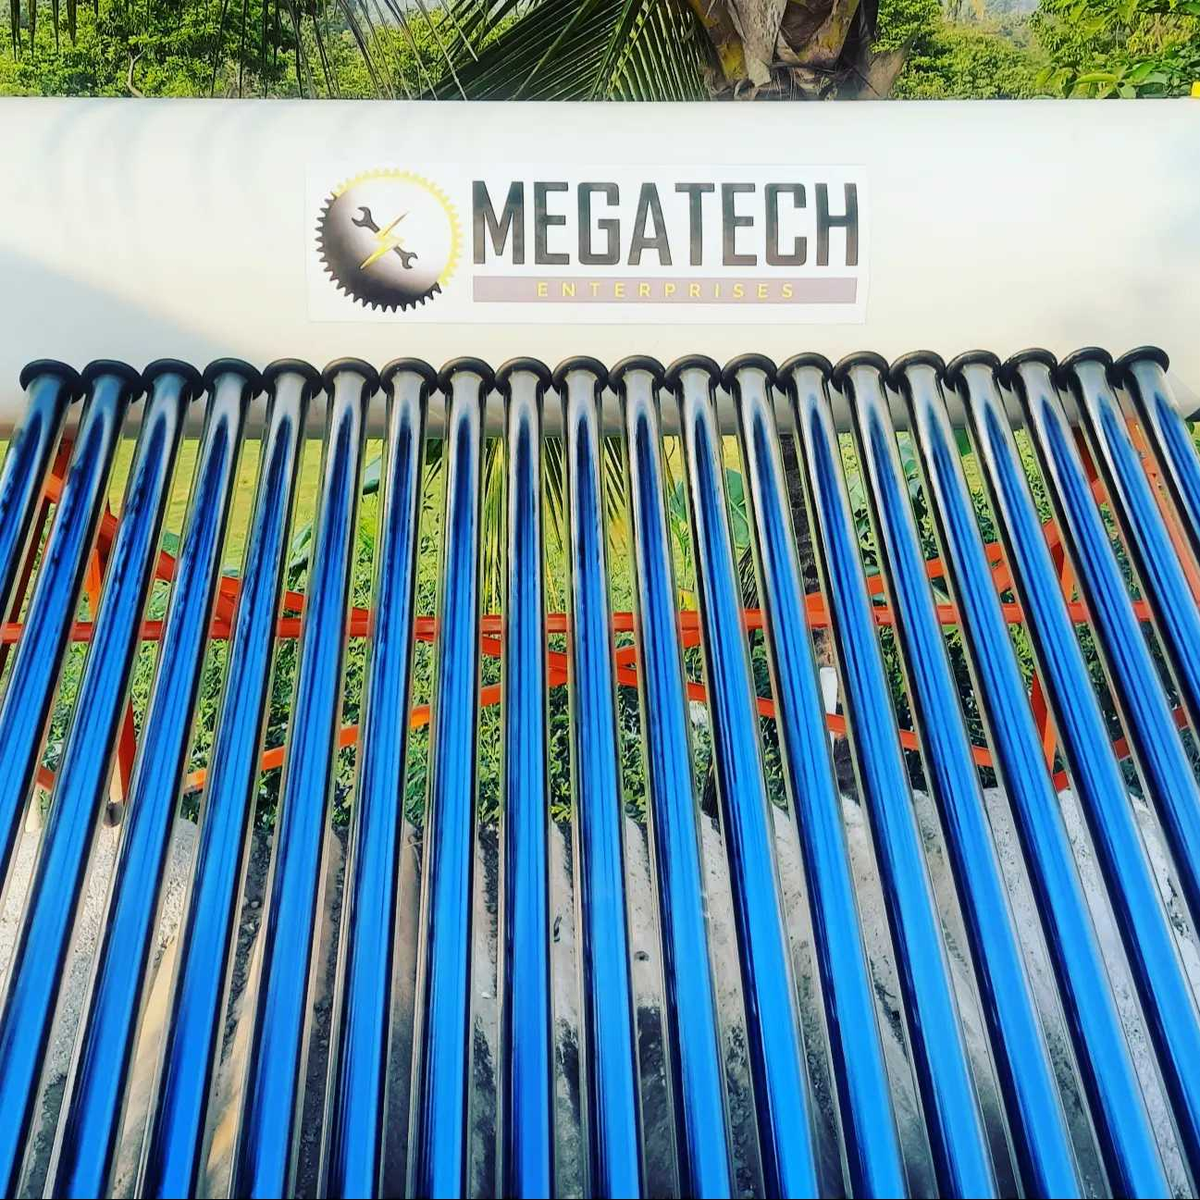 Megatech Enterprises